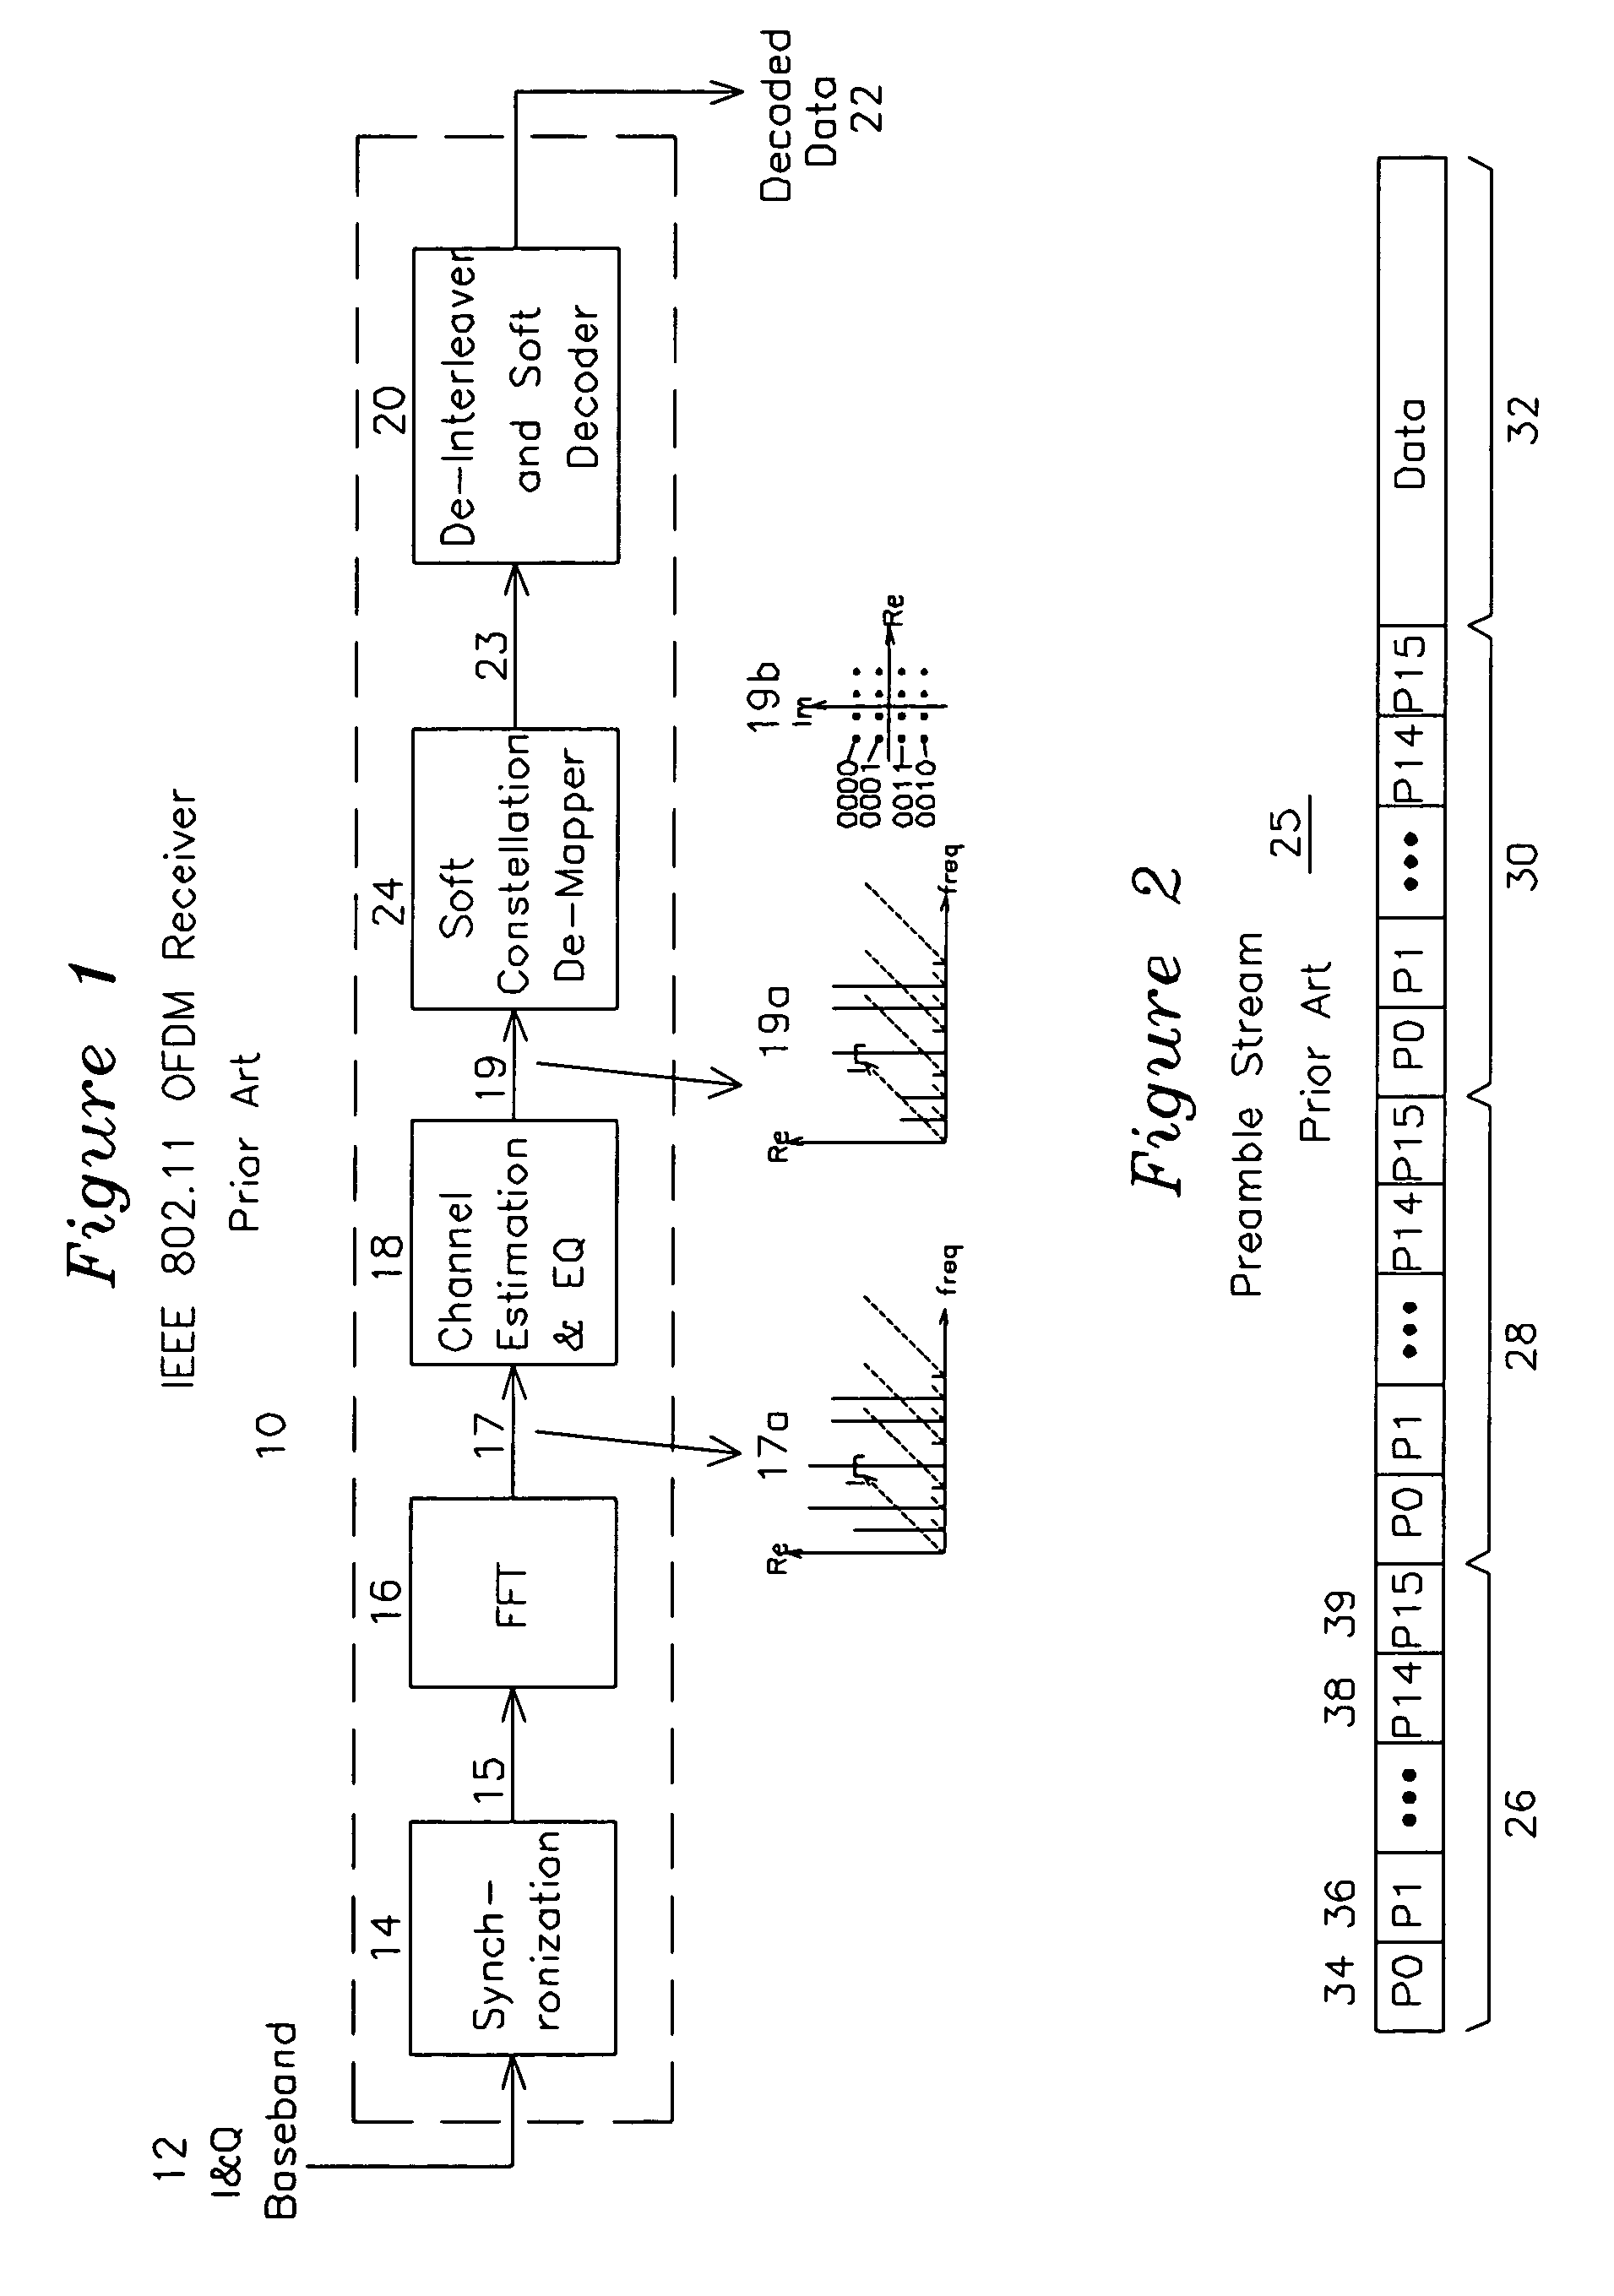 Reed-solomon decoder using a configurable arithmetic processor